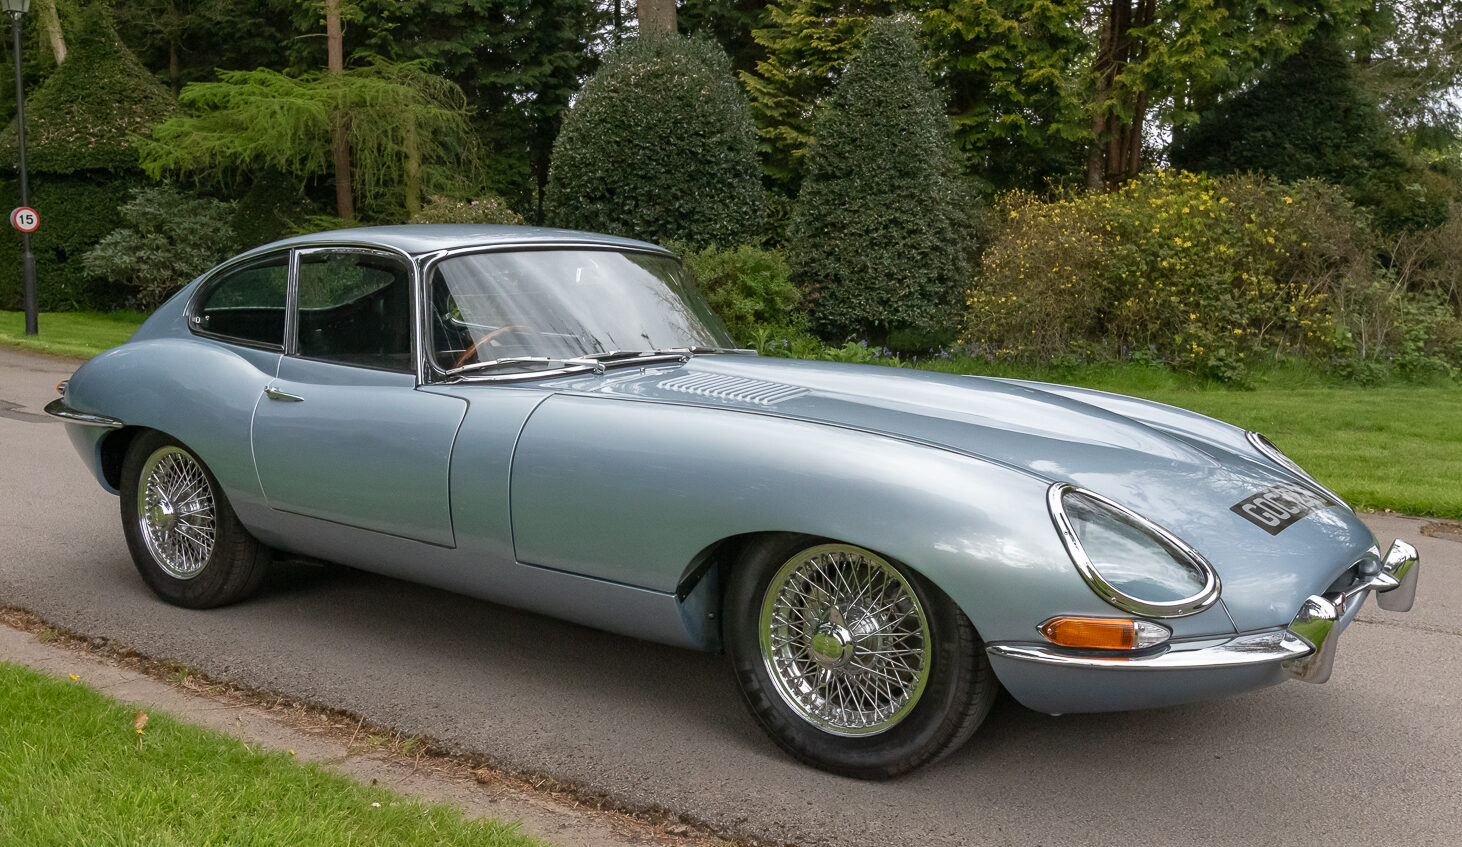 1966 Jaguar E-Type Series 1 Evoke Classics classic cars auction online